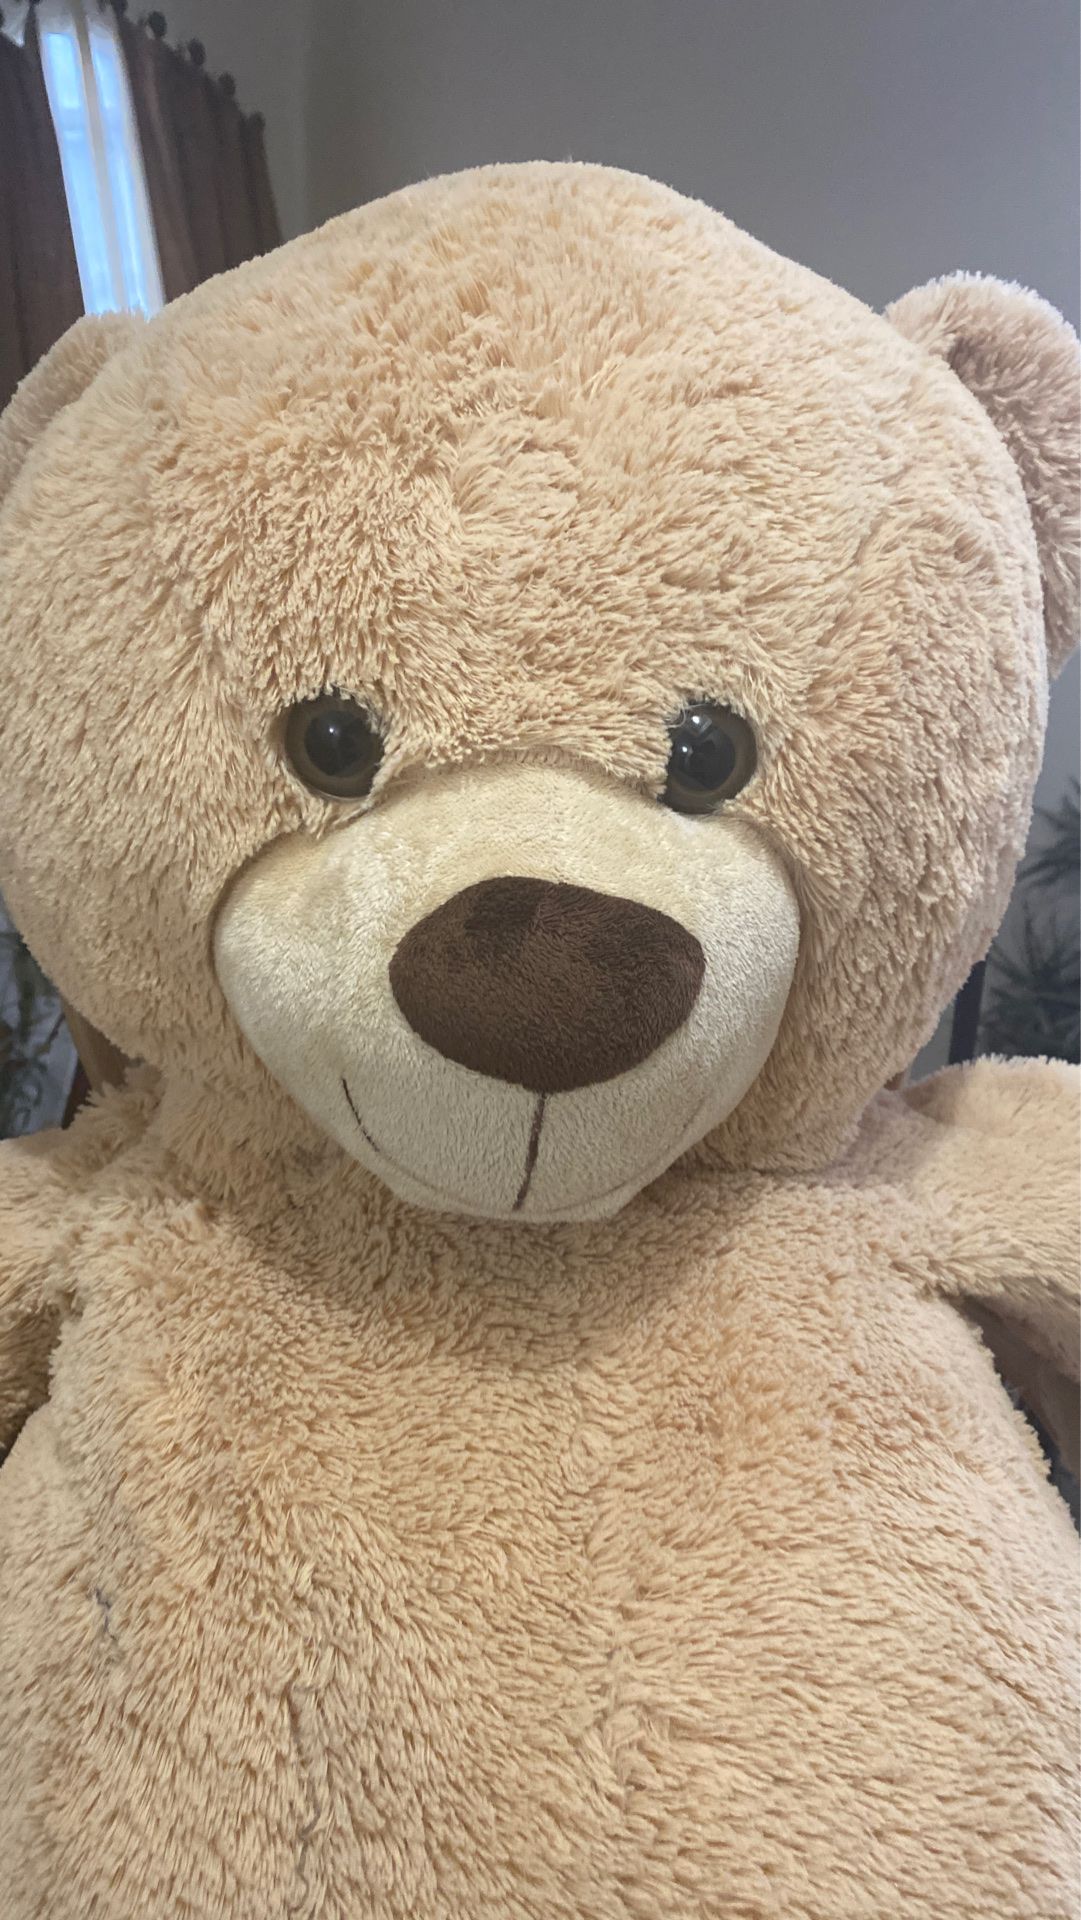 BIG Teddy bear